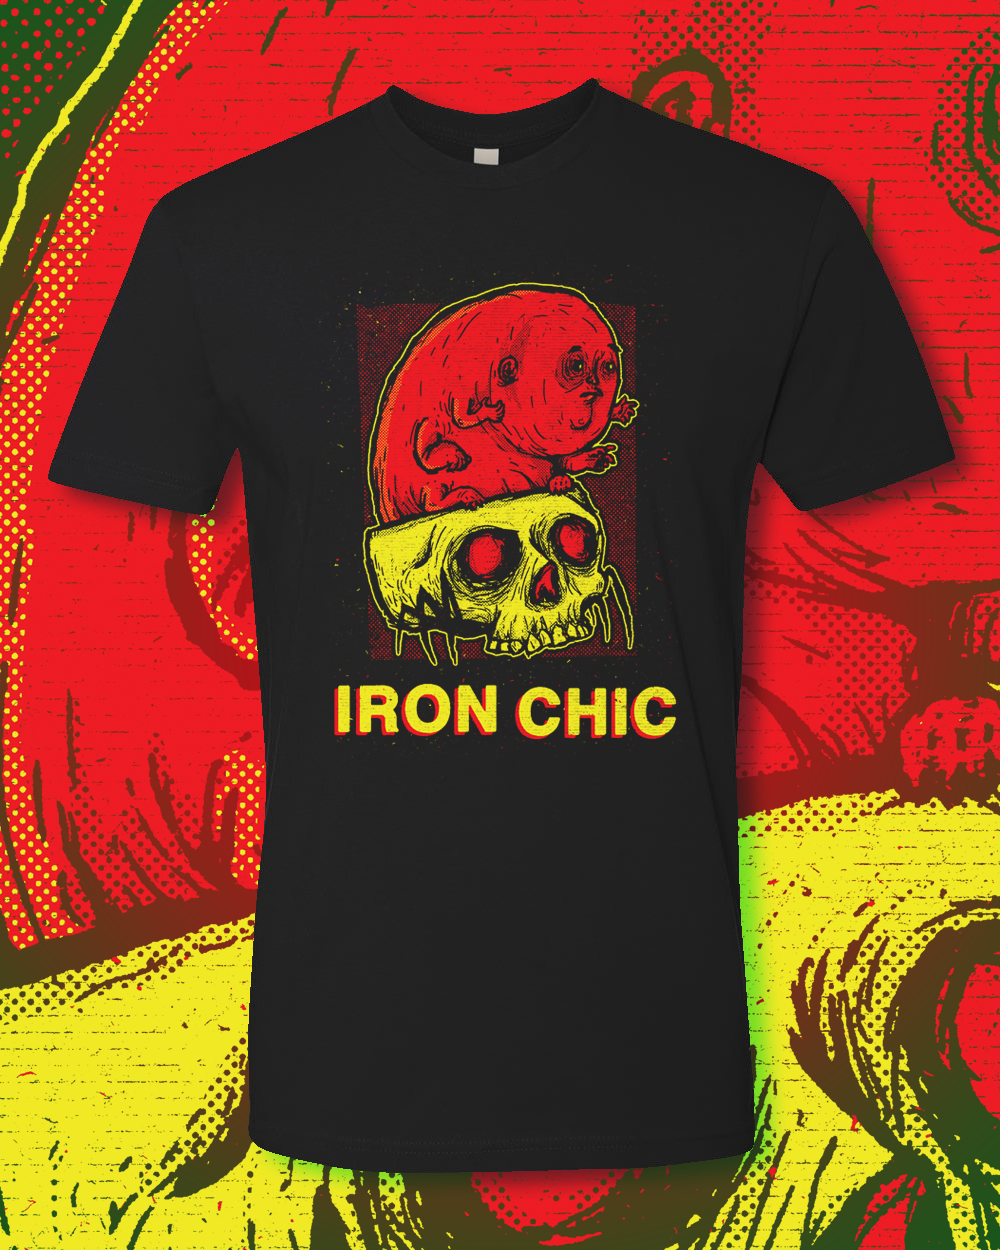 Iron Chic - Not Like This tee